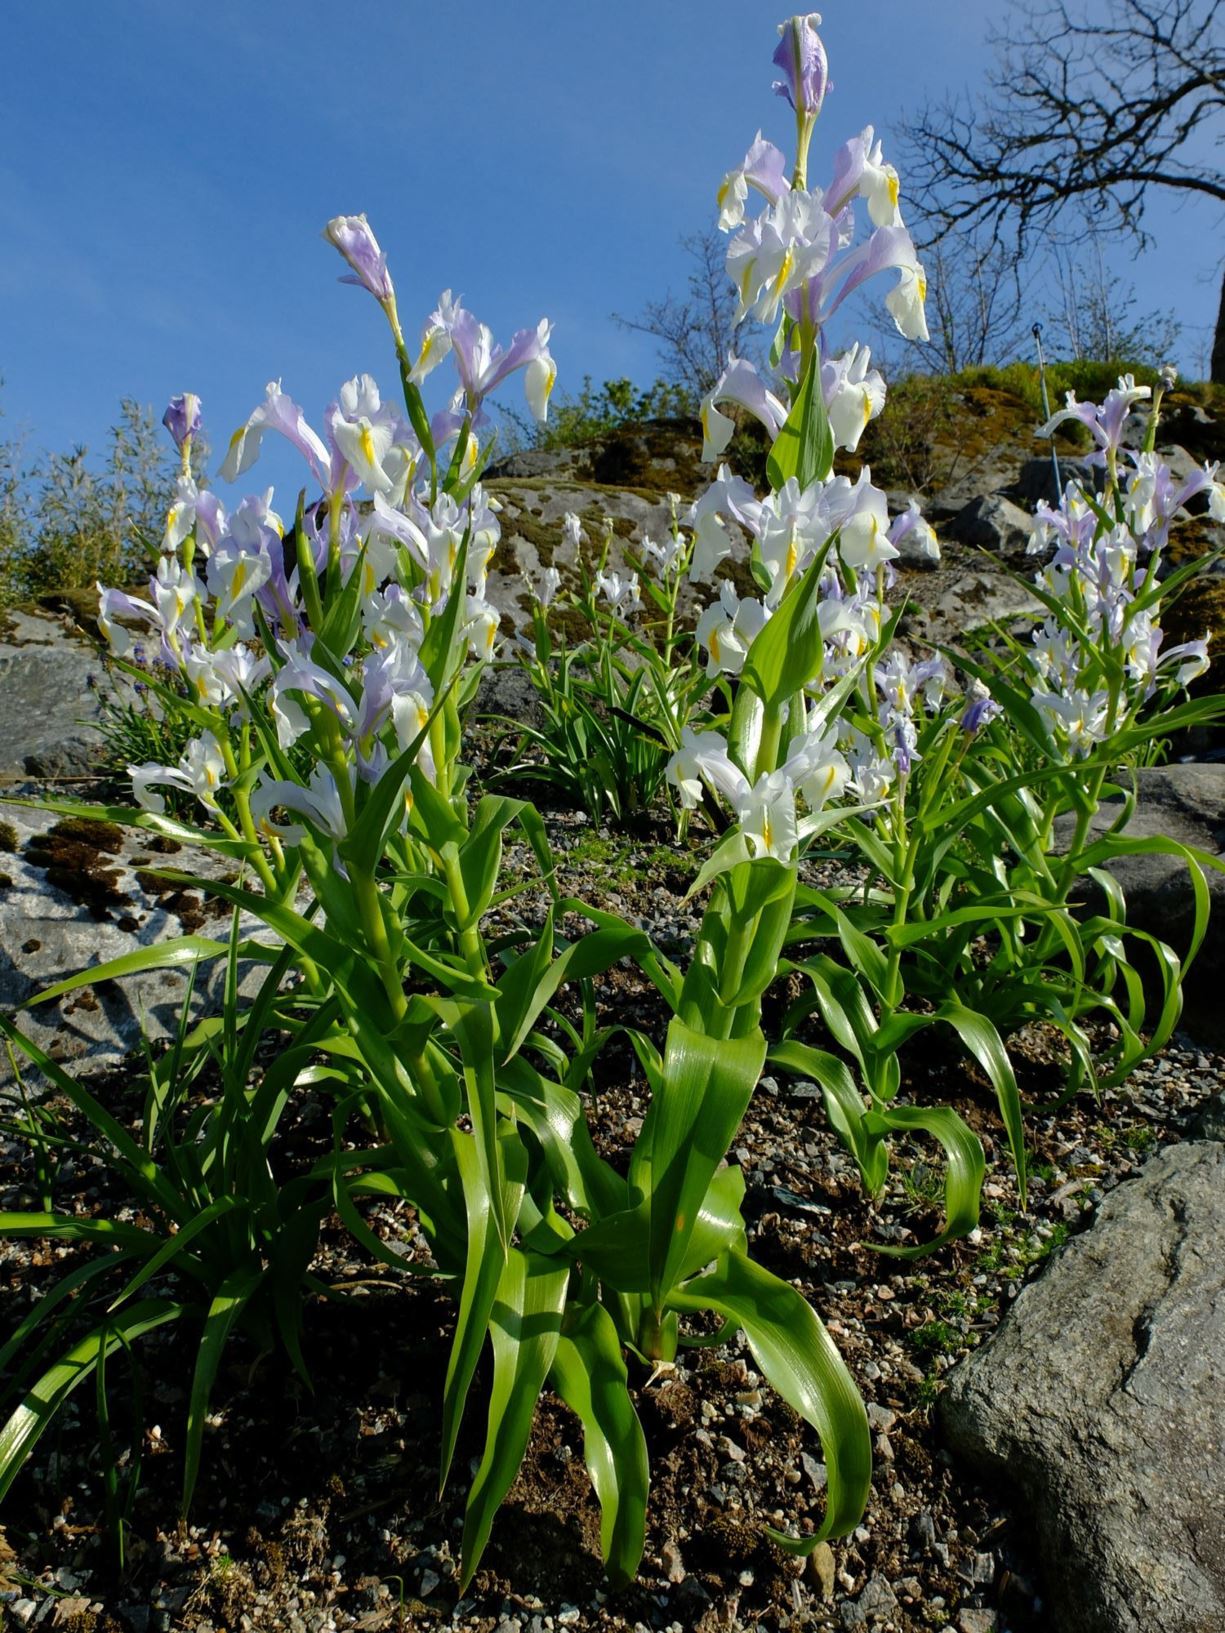 Iris magnifica 'Agalik'